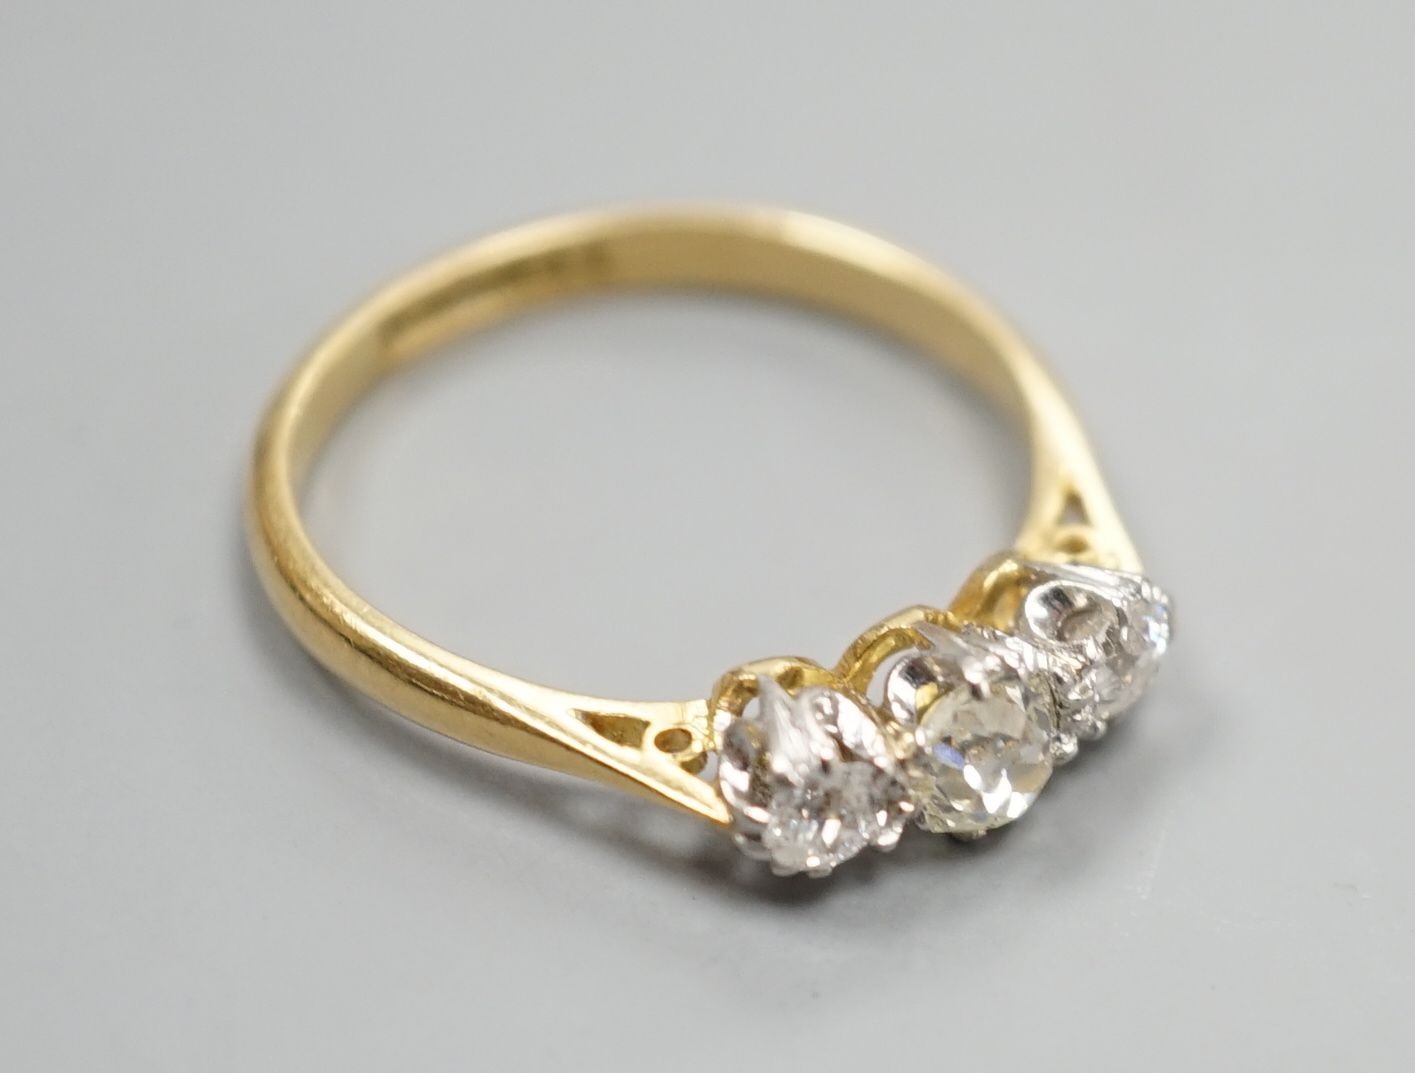 An 18ct & plat, three stone diamond ring, size L, gross weight 2.3 grams.